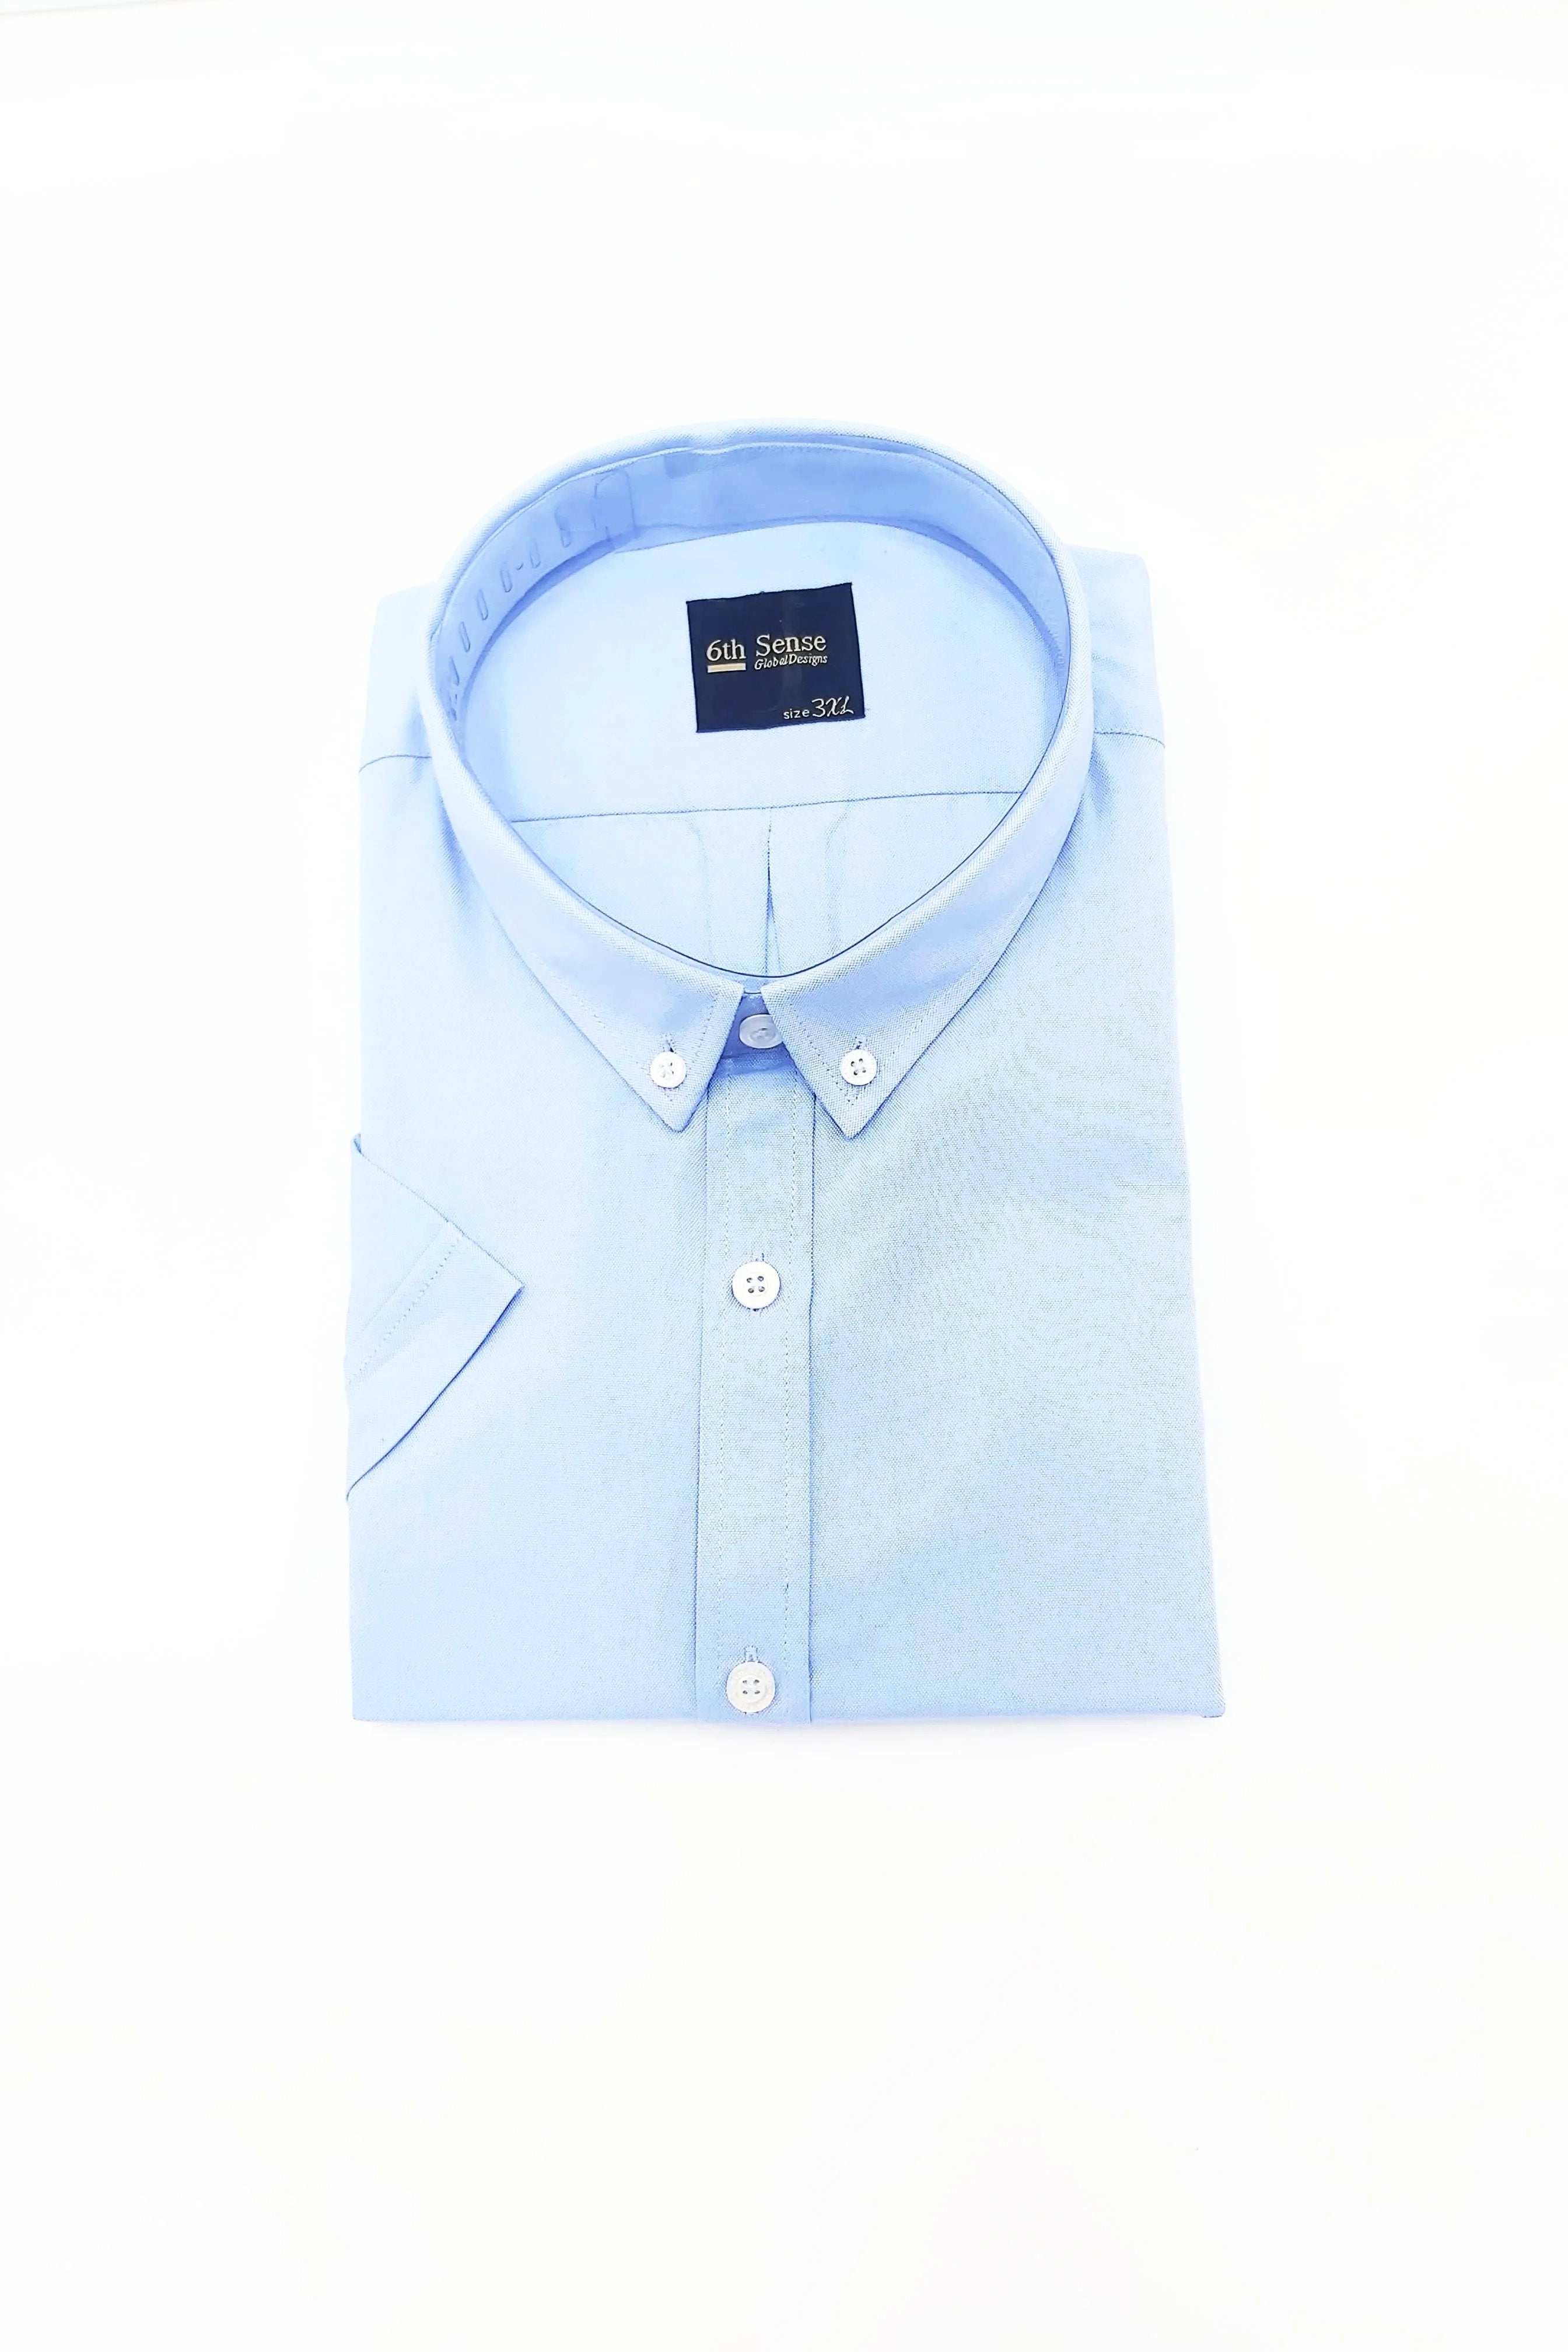 Short Sleeve Sky Blue Plain Shirt-Front View